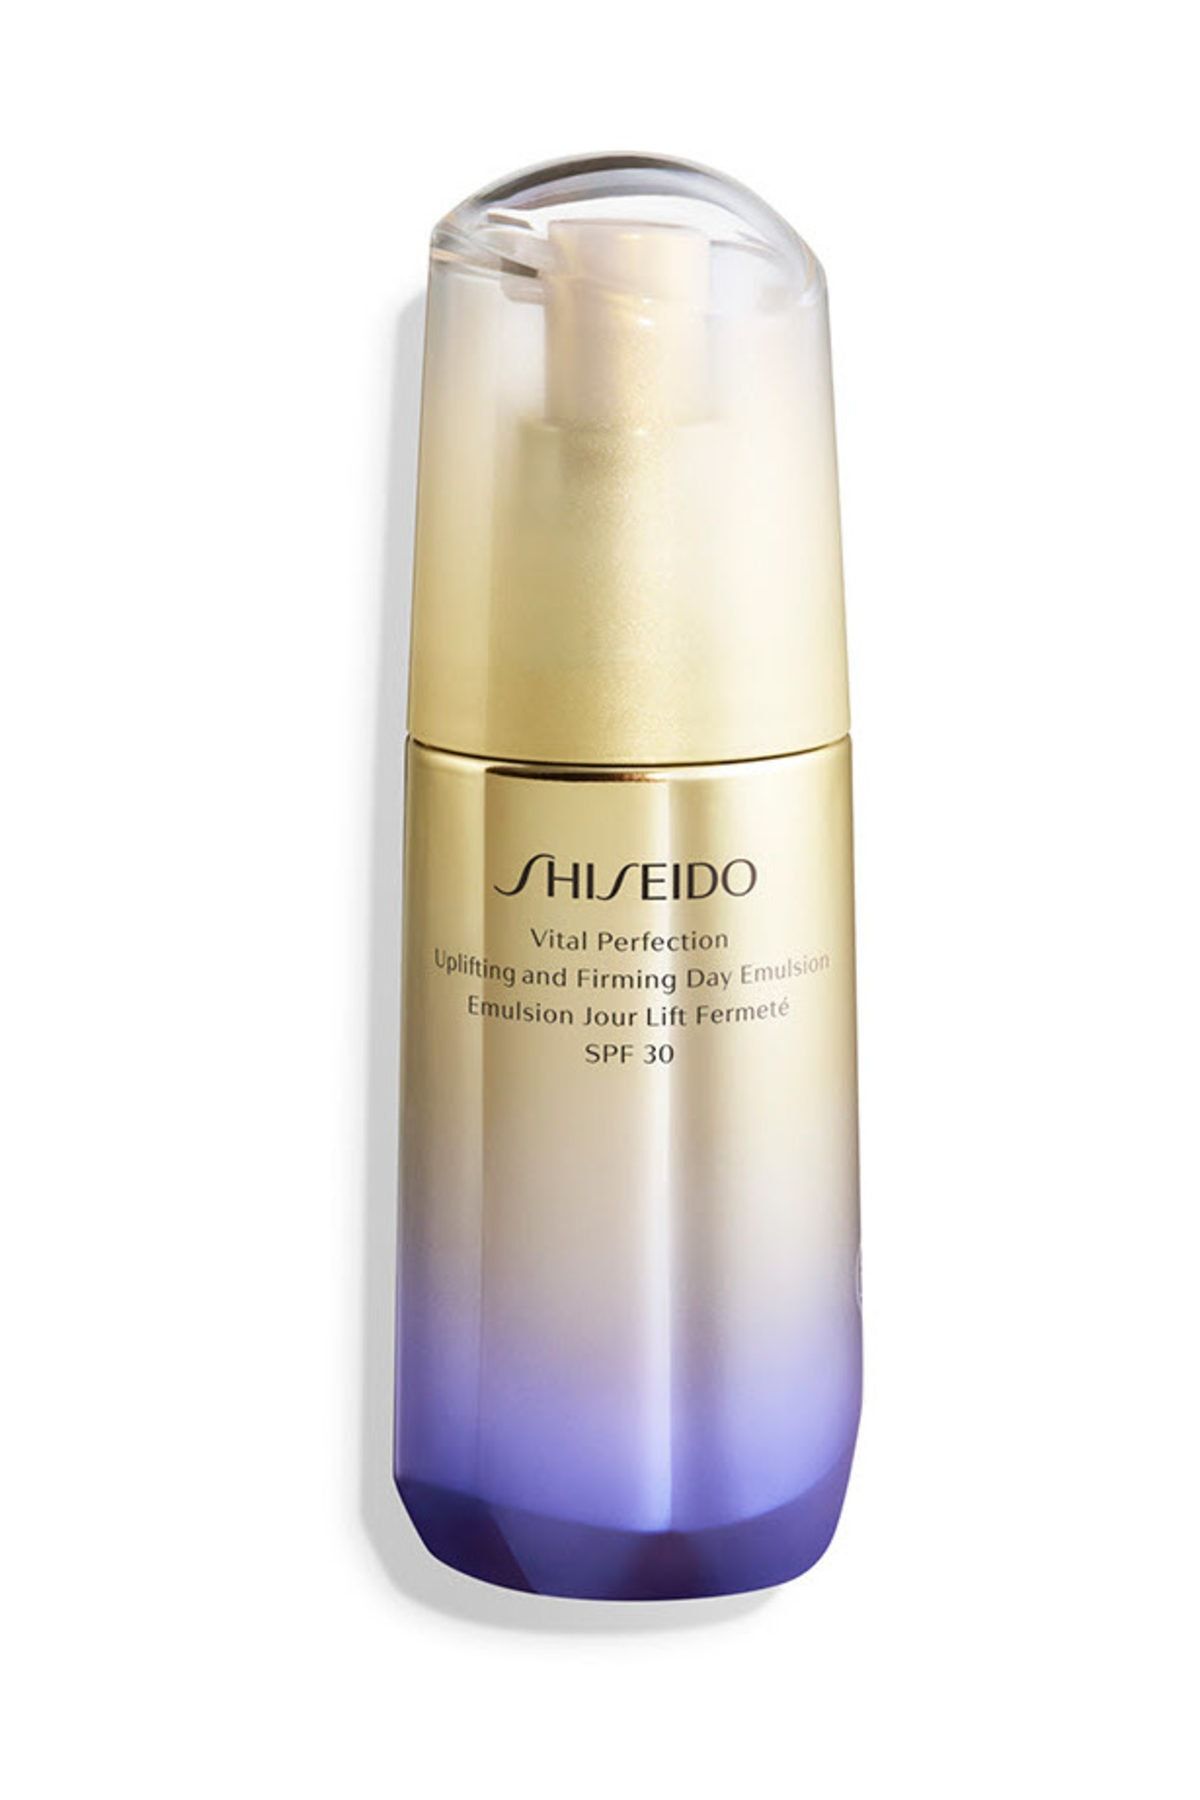 Shiseido Cildi Sıkılaştıran Gündüz Emülsiyonu - VPN Uplifting And Firming Day Emulsion 75 ml 768614149385